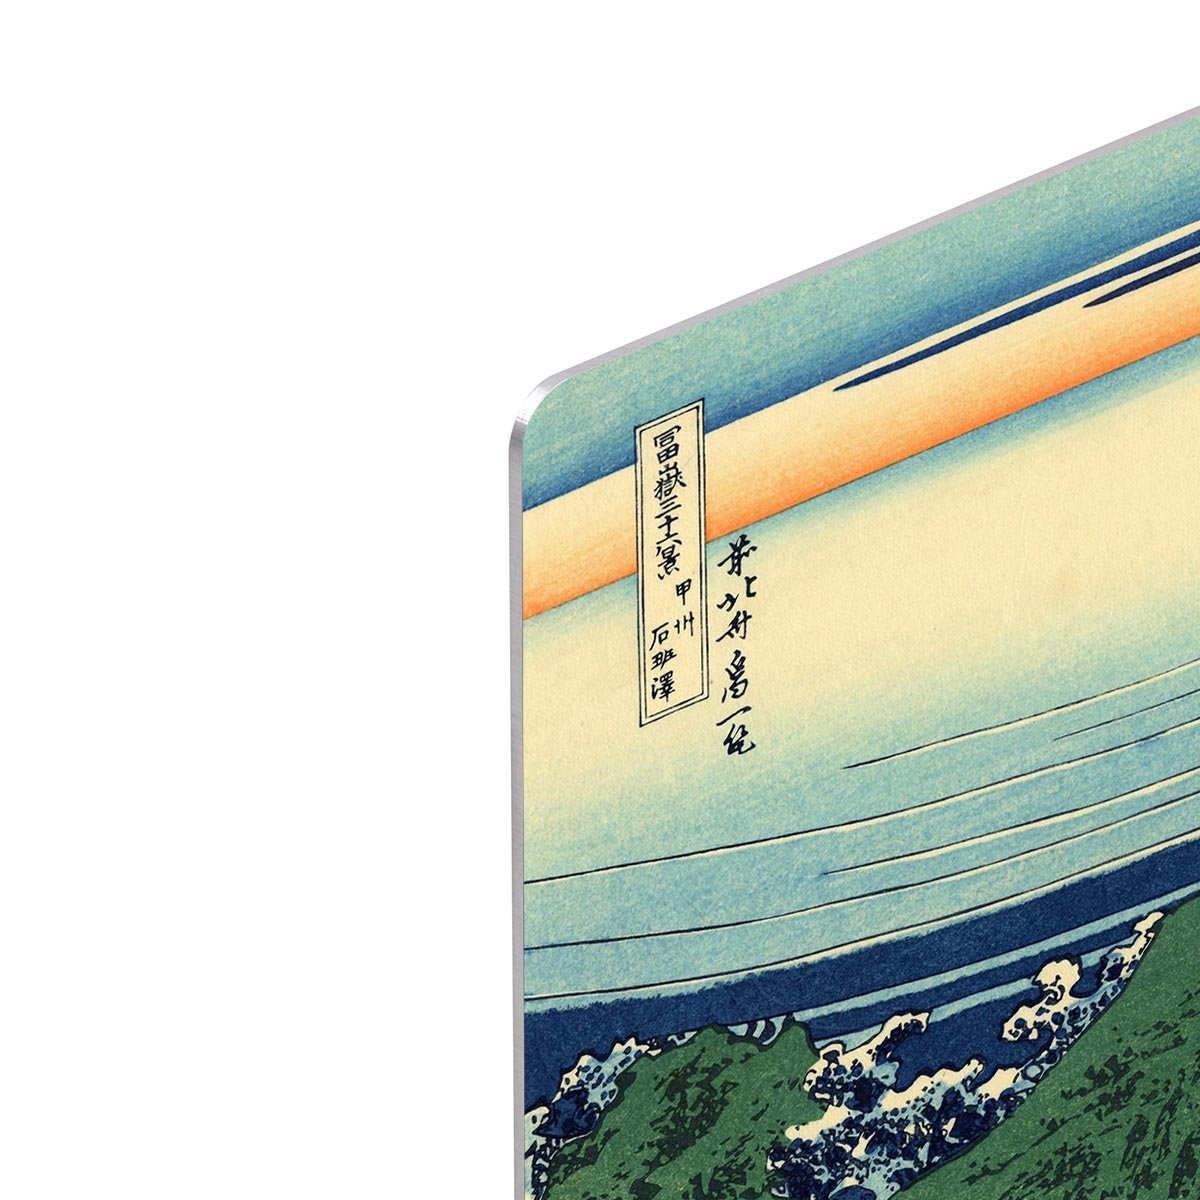 Kajikazawa in Kai province by Hokusai HD Metal Print